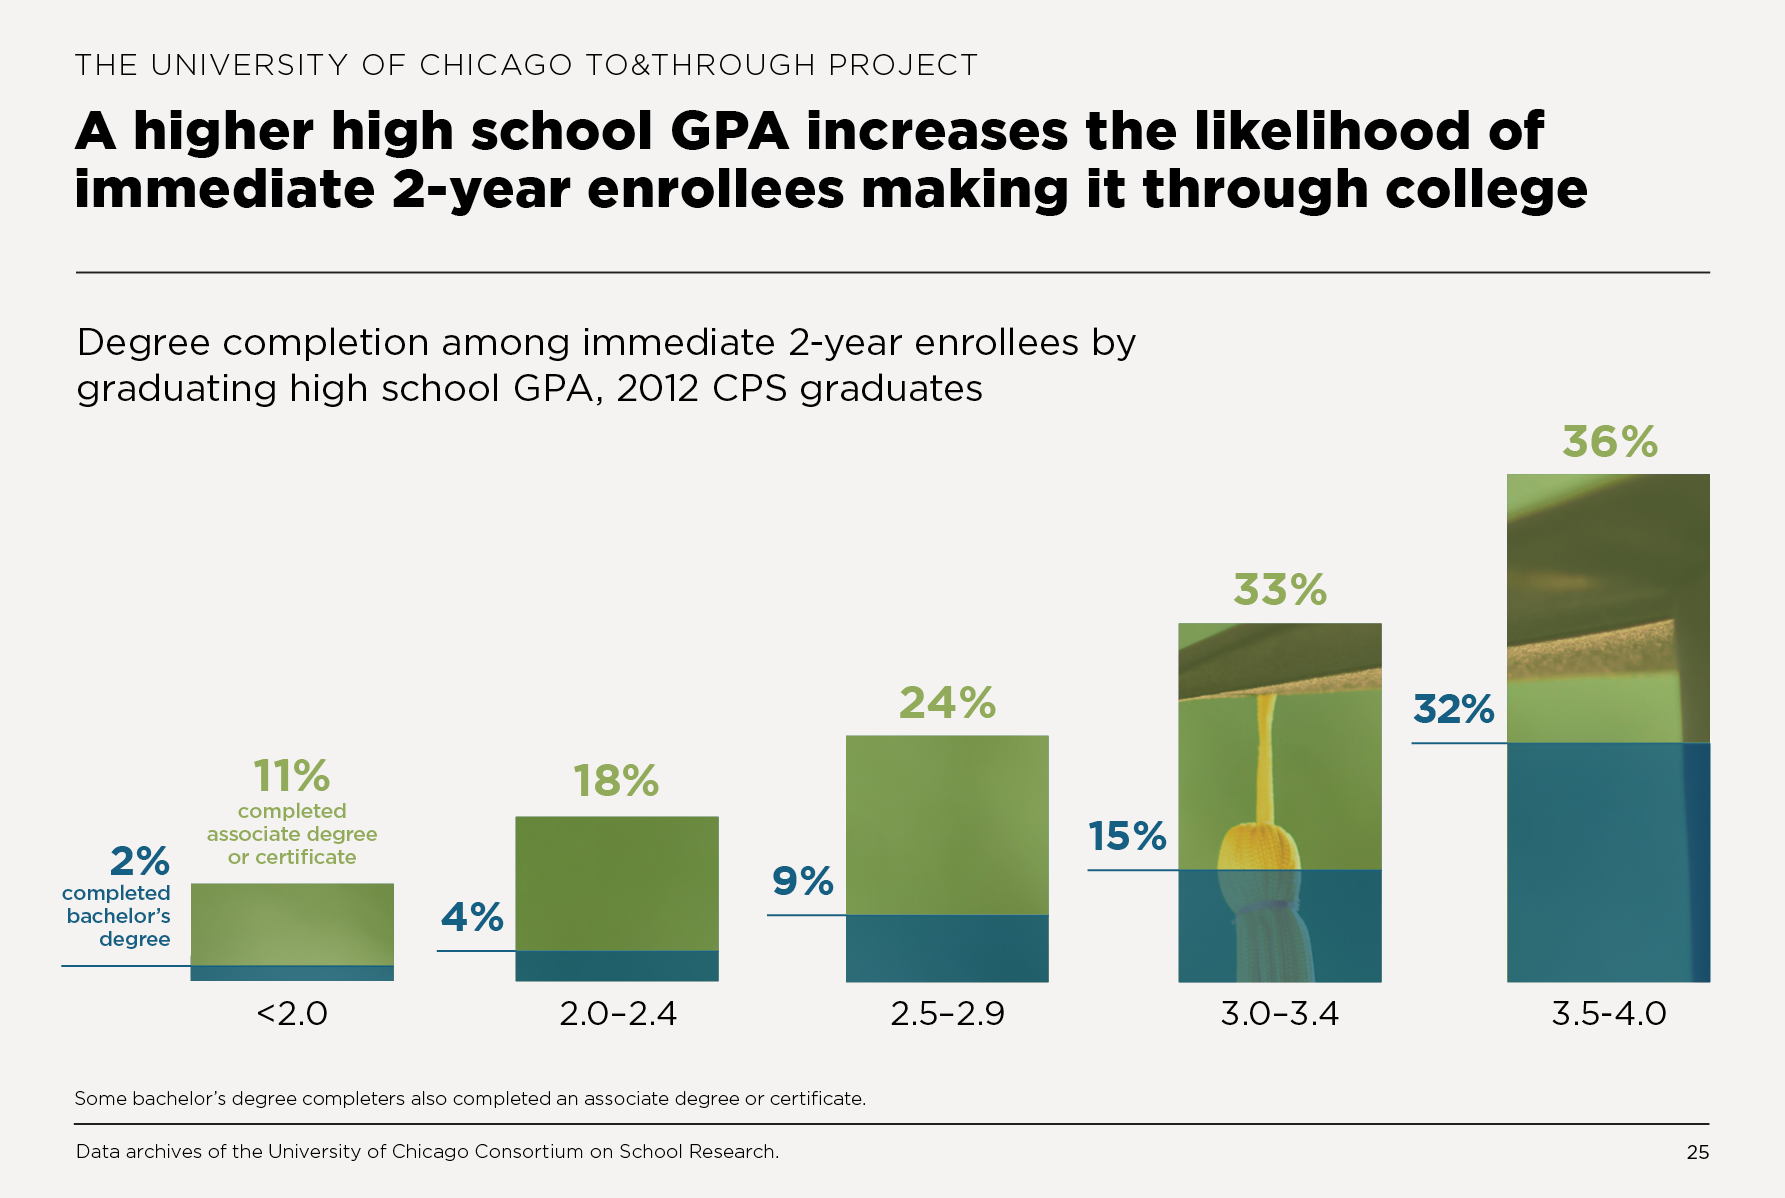 A higher high school GPA increases the likelihood of immediate 2-year enrollees making it through college